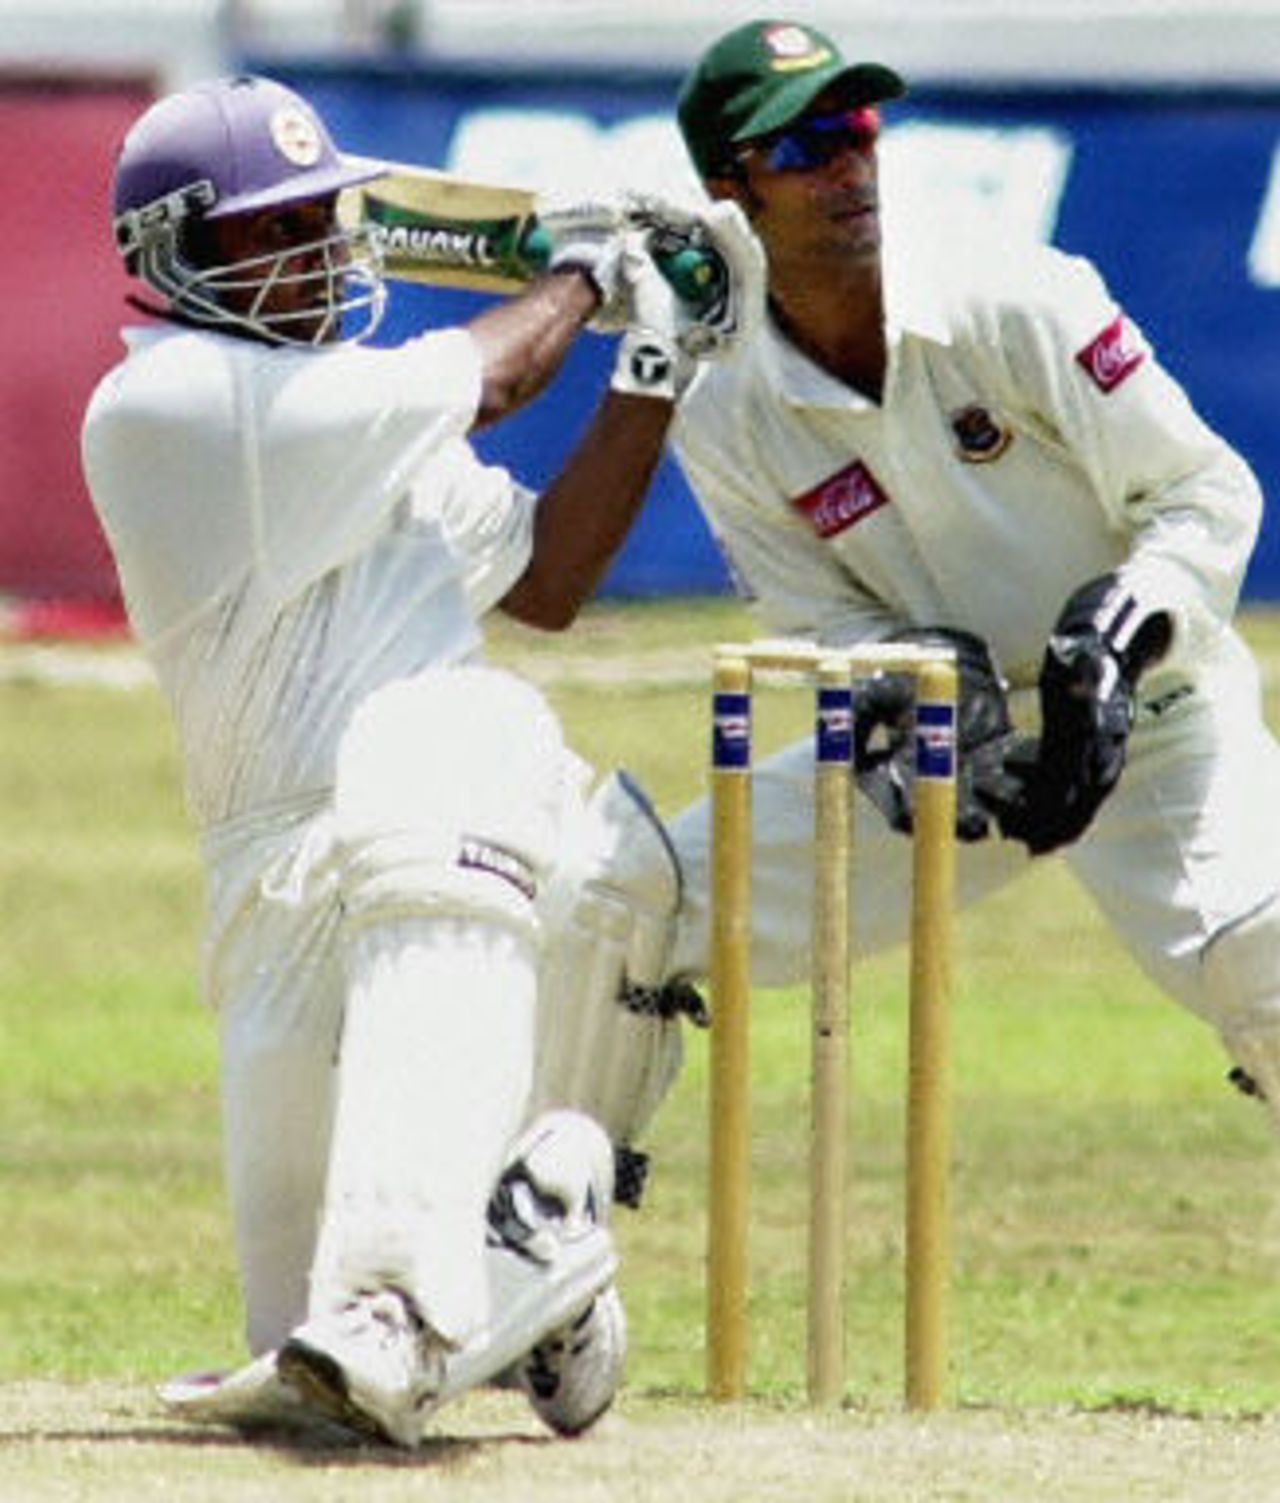 Mahela Jayawardene sweeps a ball to the boundary, Asian Test Championship 2001-02, 2nd Match, Sri Lanka v Bangladesh, Sinhalese Sports Club Ground, Colombo.